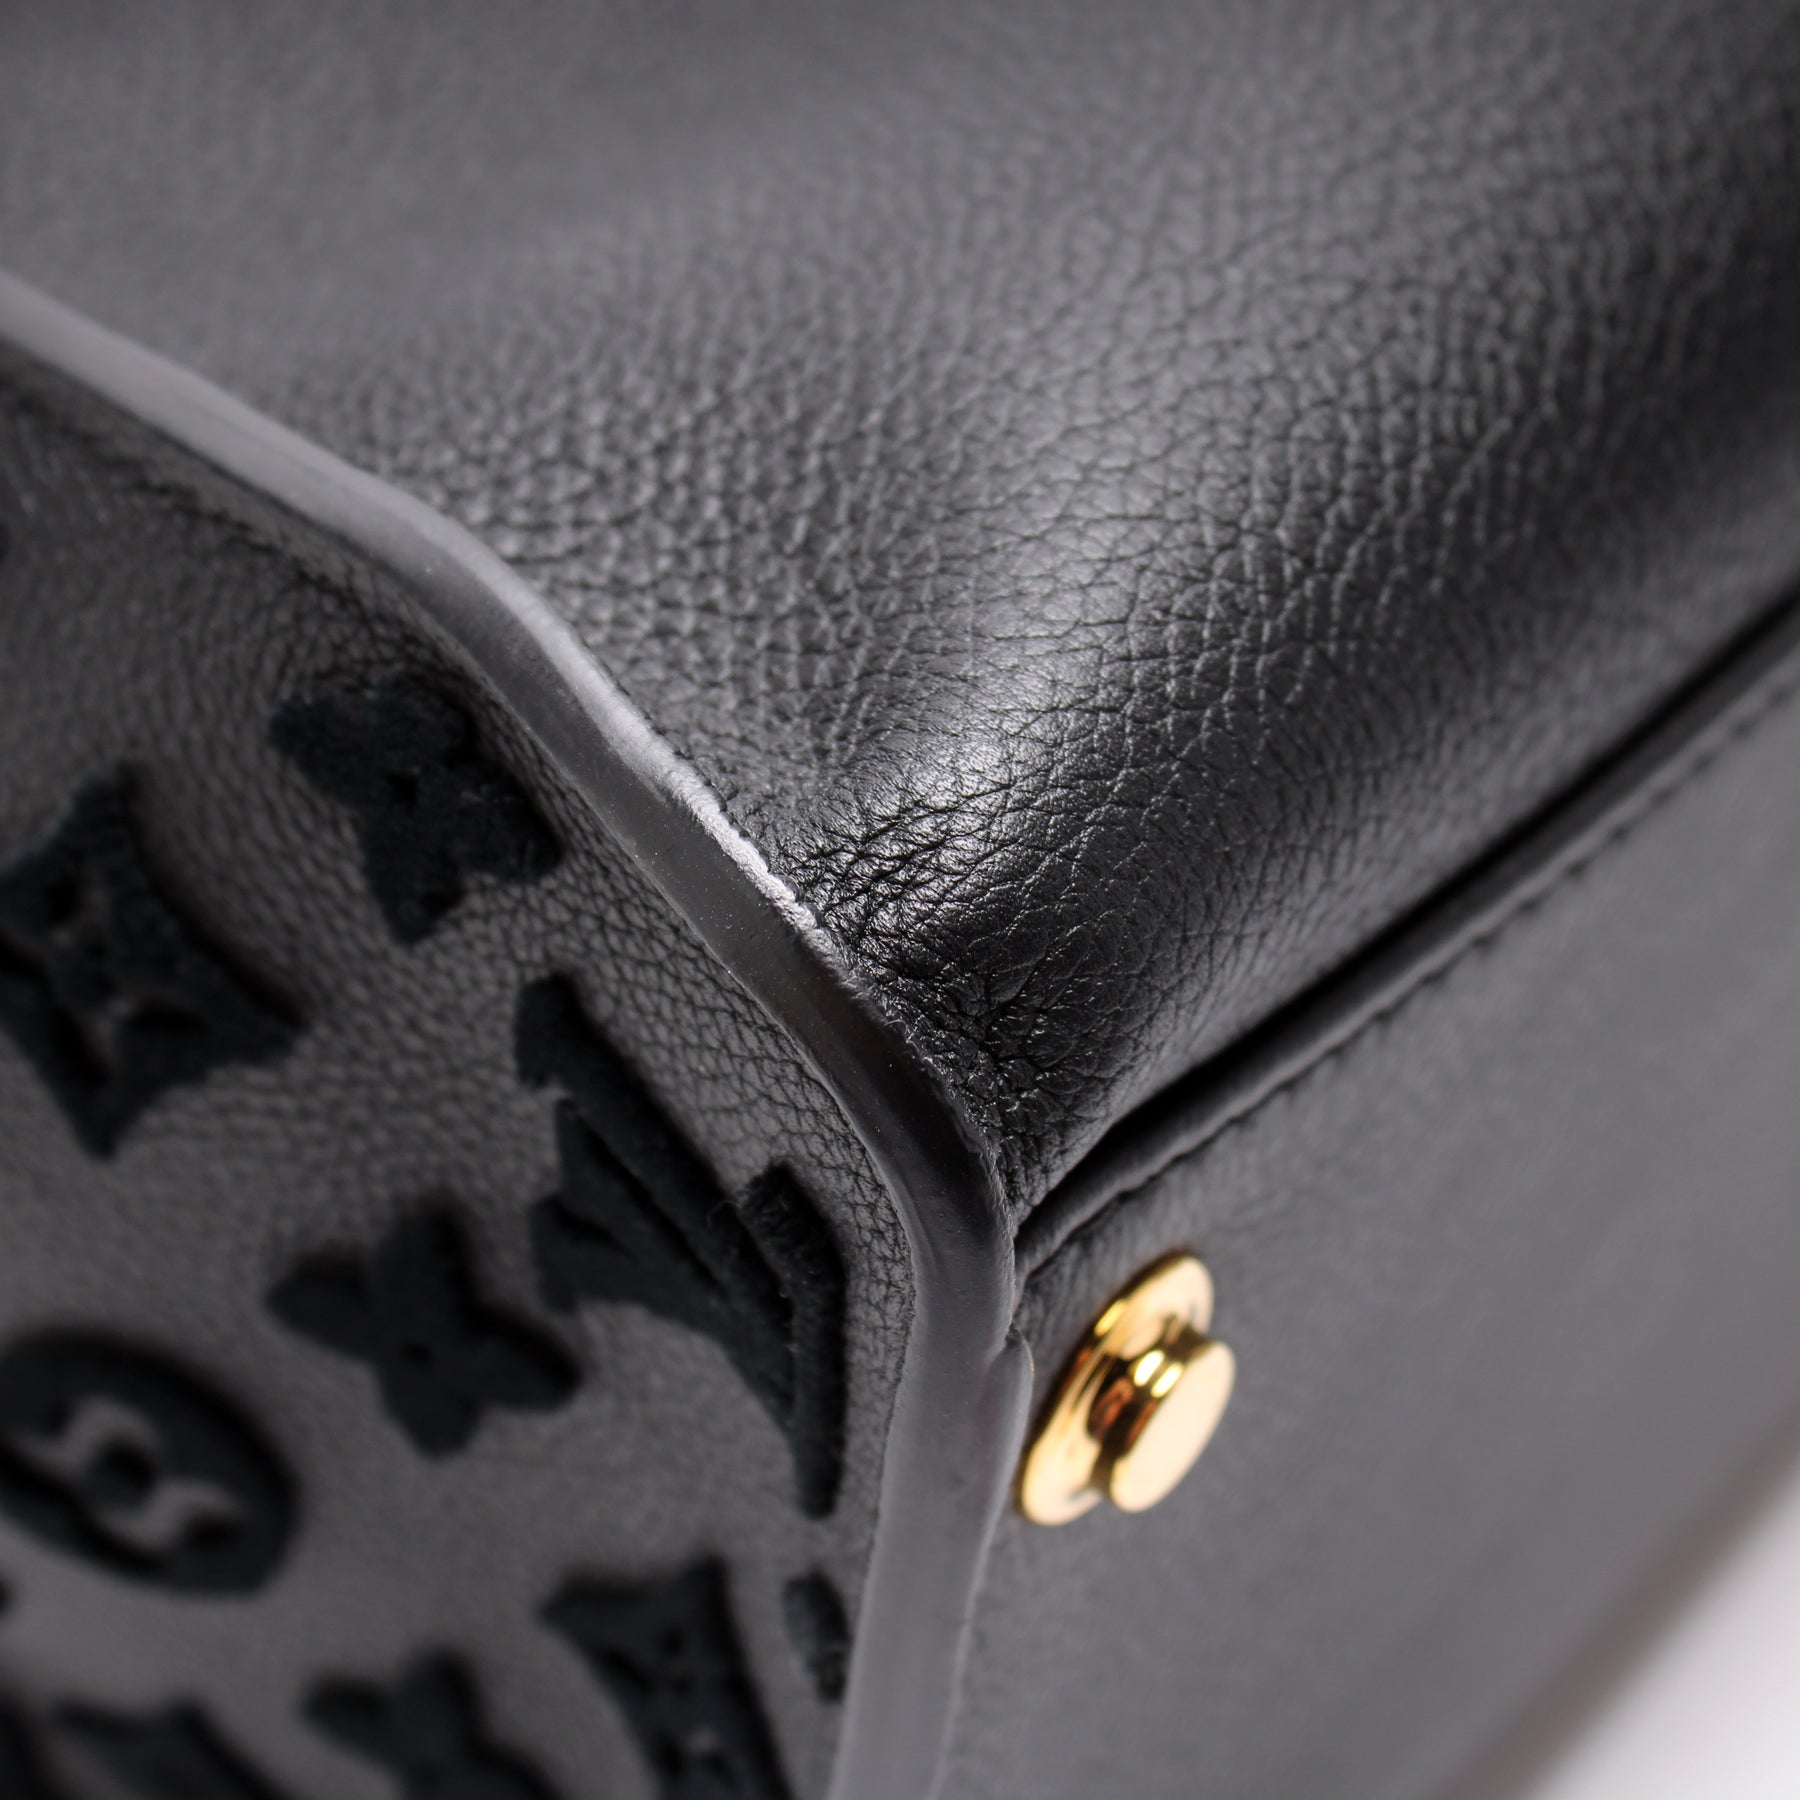 On My Side MM Calf – Keeks Designer Handbags